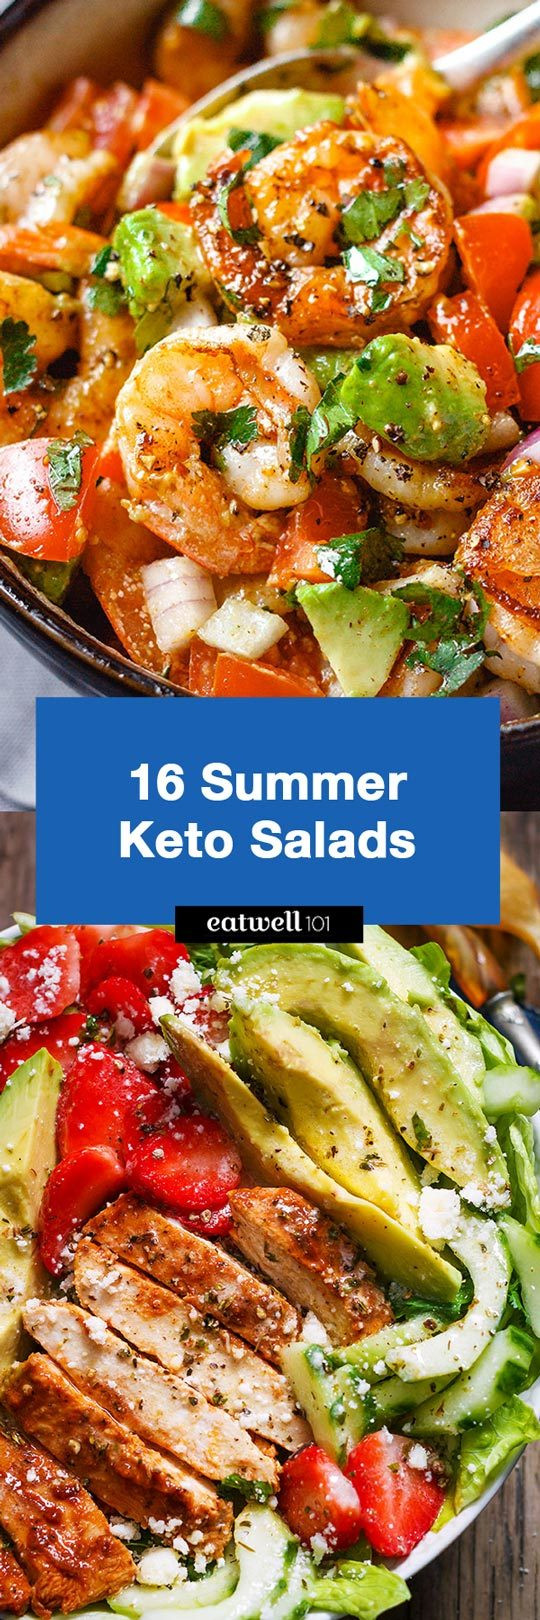 Summer Keto Dinners
 Keto Salad Recipes 16 Best Summer Keto Salad Recipes